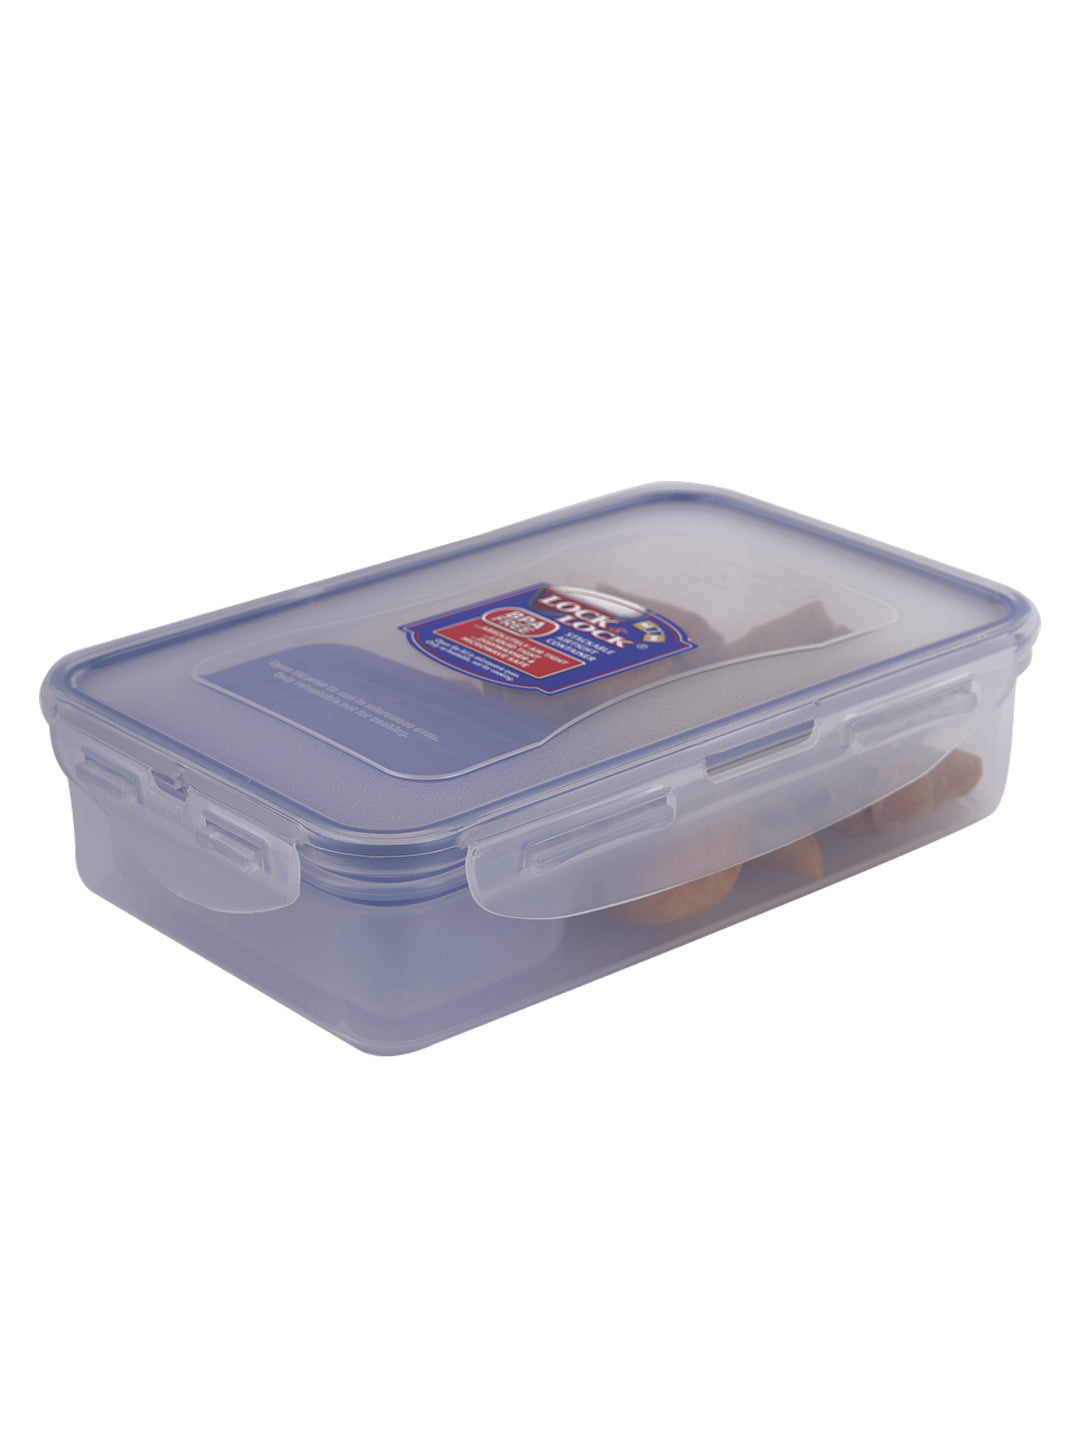 LocknLock Classics Rectangular Food Container with Sauce Case